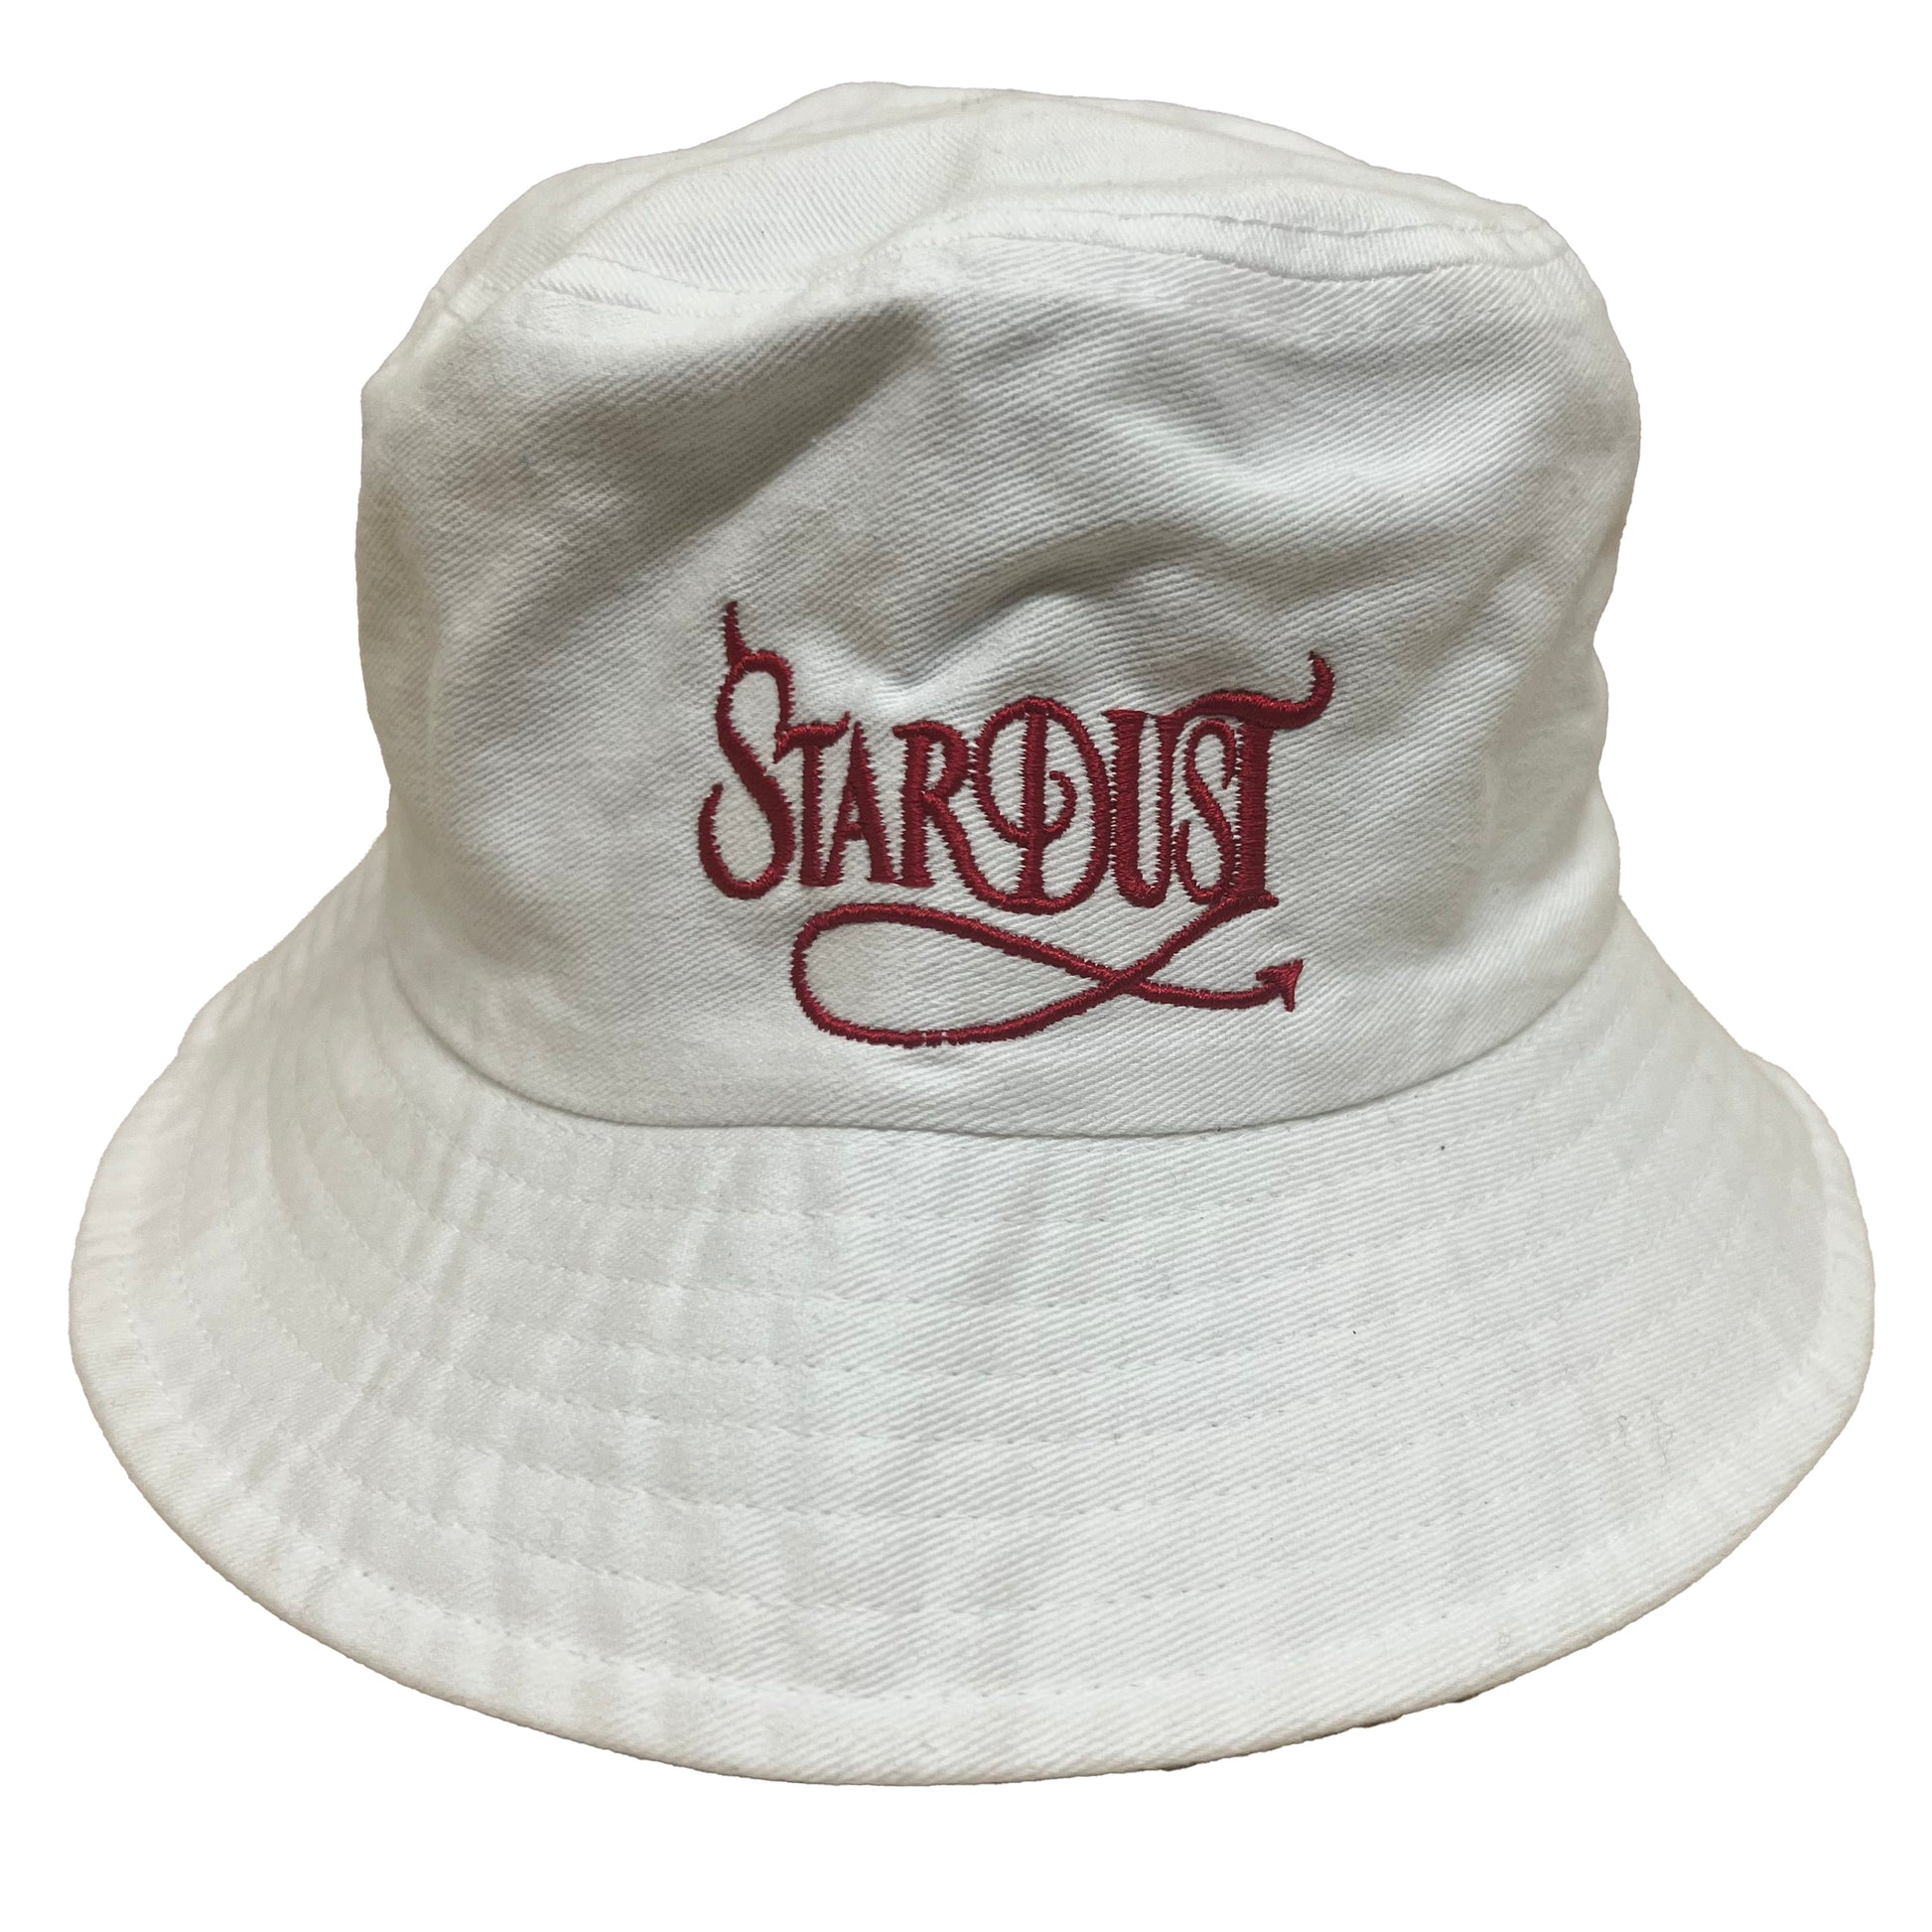 Stardust Devil's Wanderlust Bucket Hat 001 Stone Washed White / Red